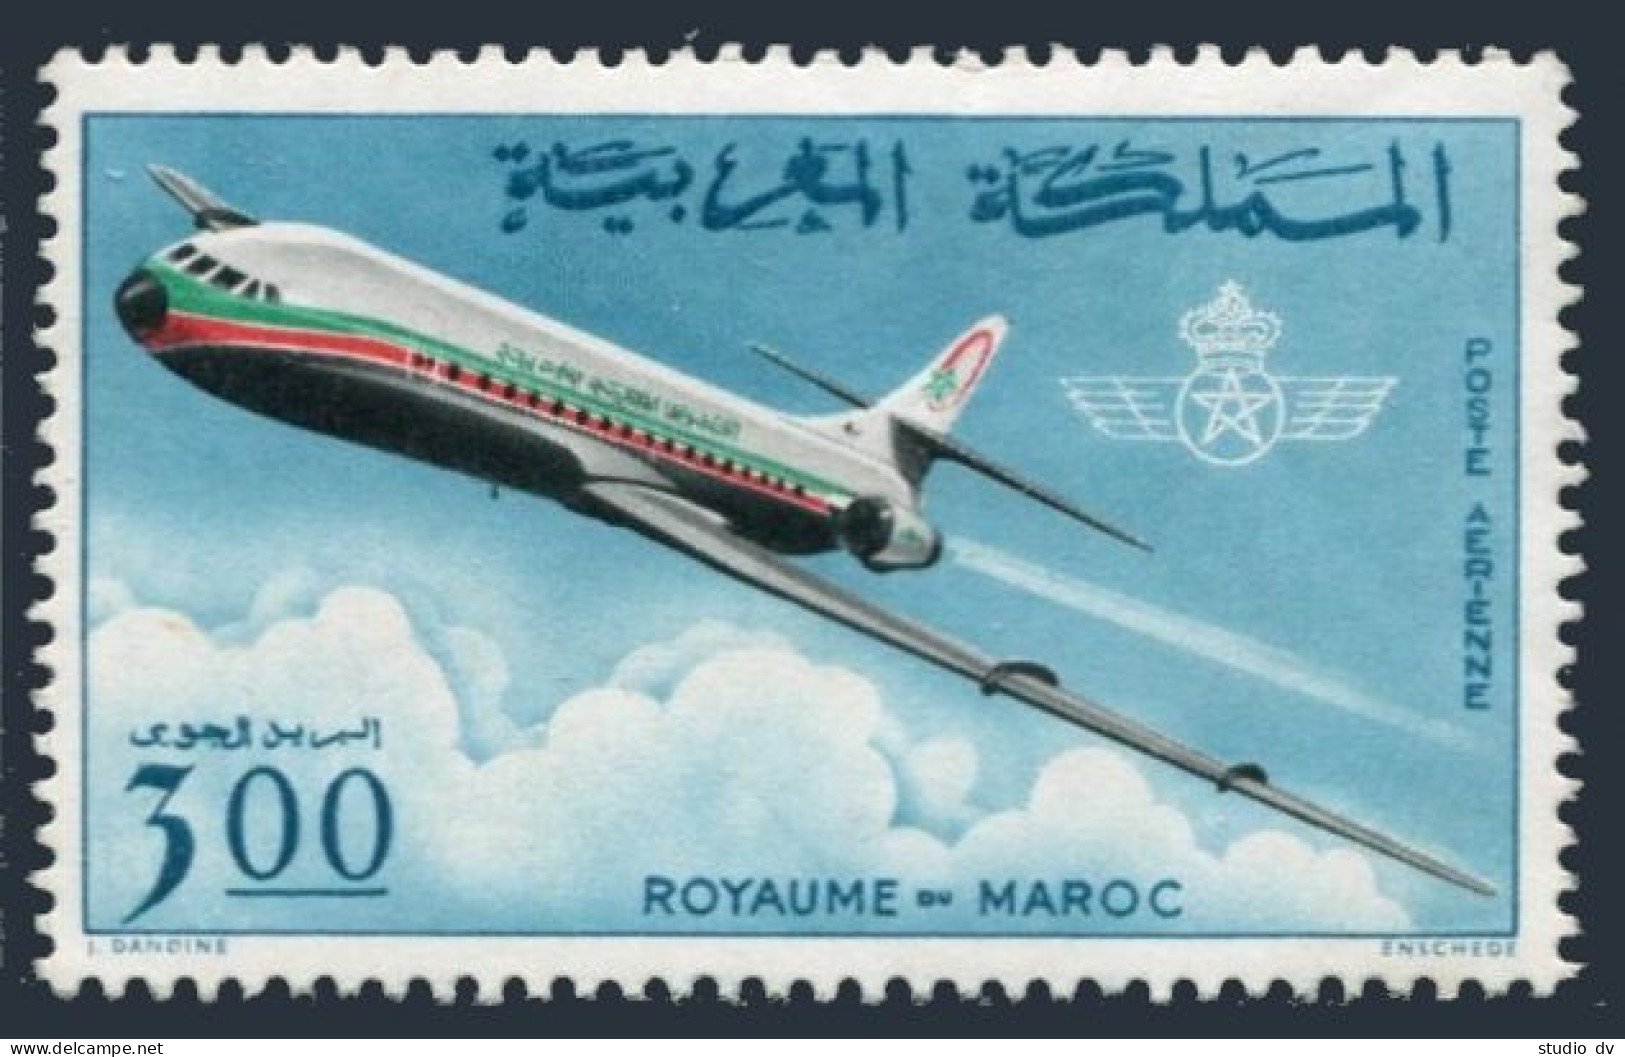 Morocco C14, MNH. Michel 576. Air Post 1966. Jet Plane. - Marokko (1956-...)